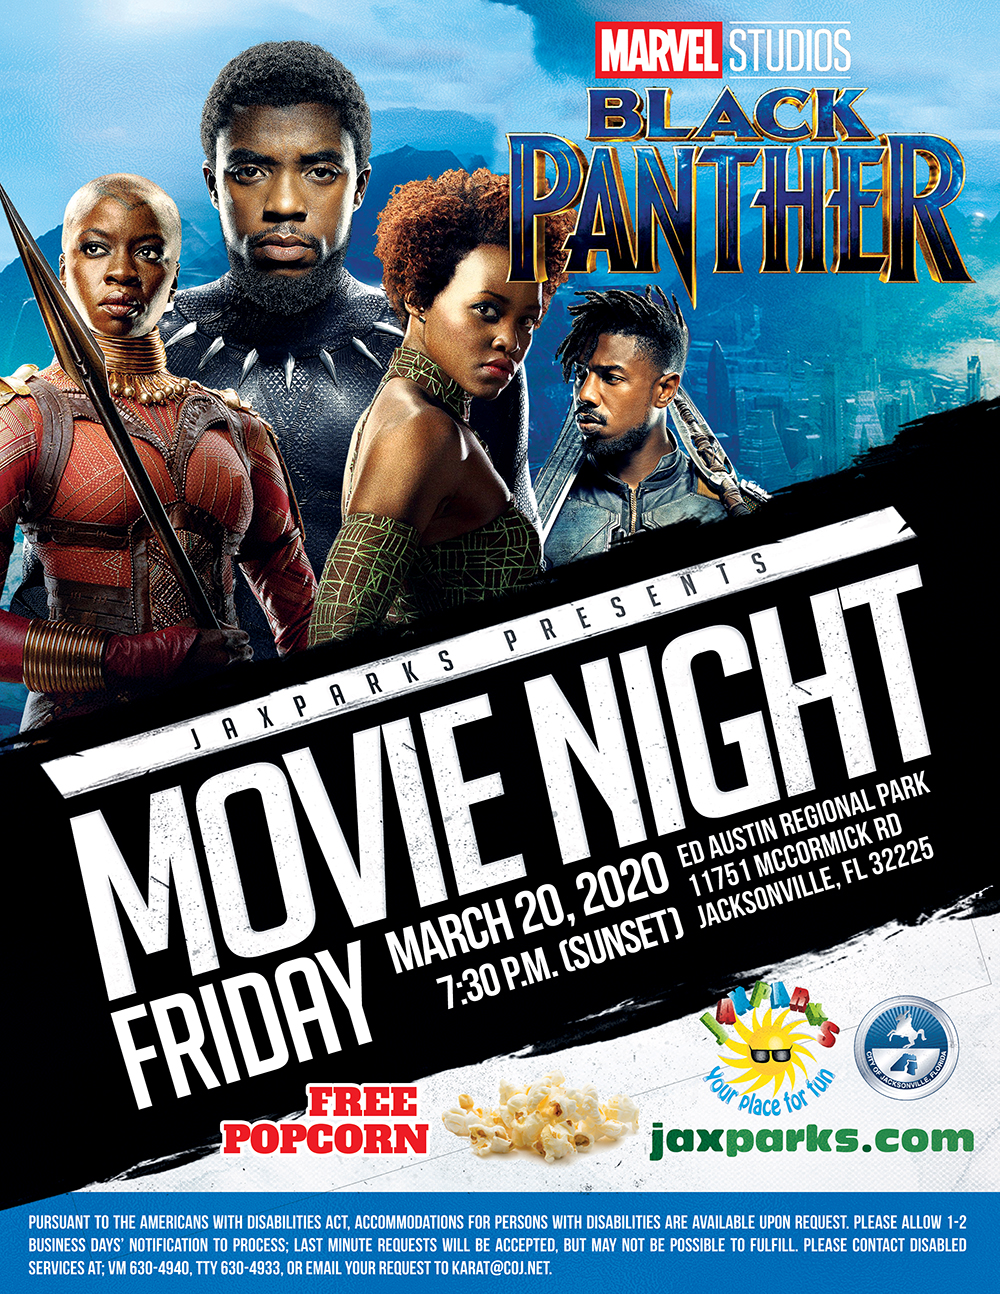 JaxParks movie night flyer for Marvel Studios Black Panther